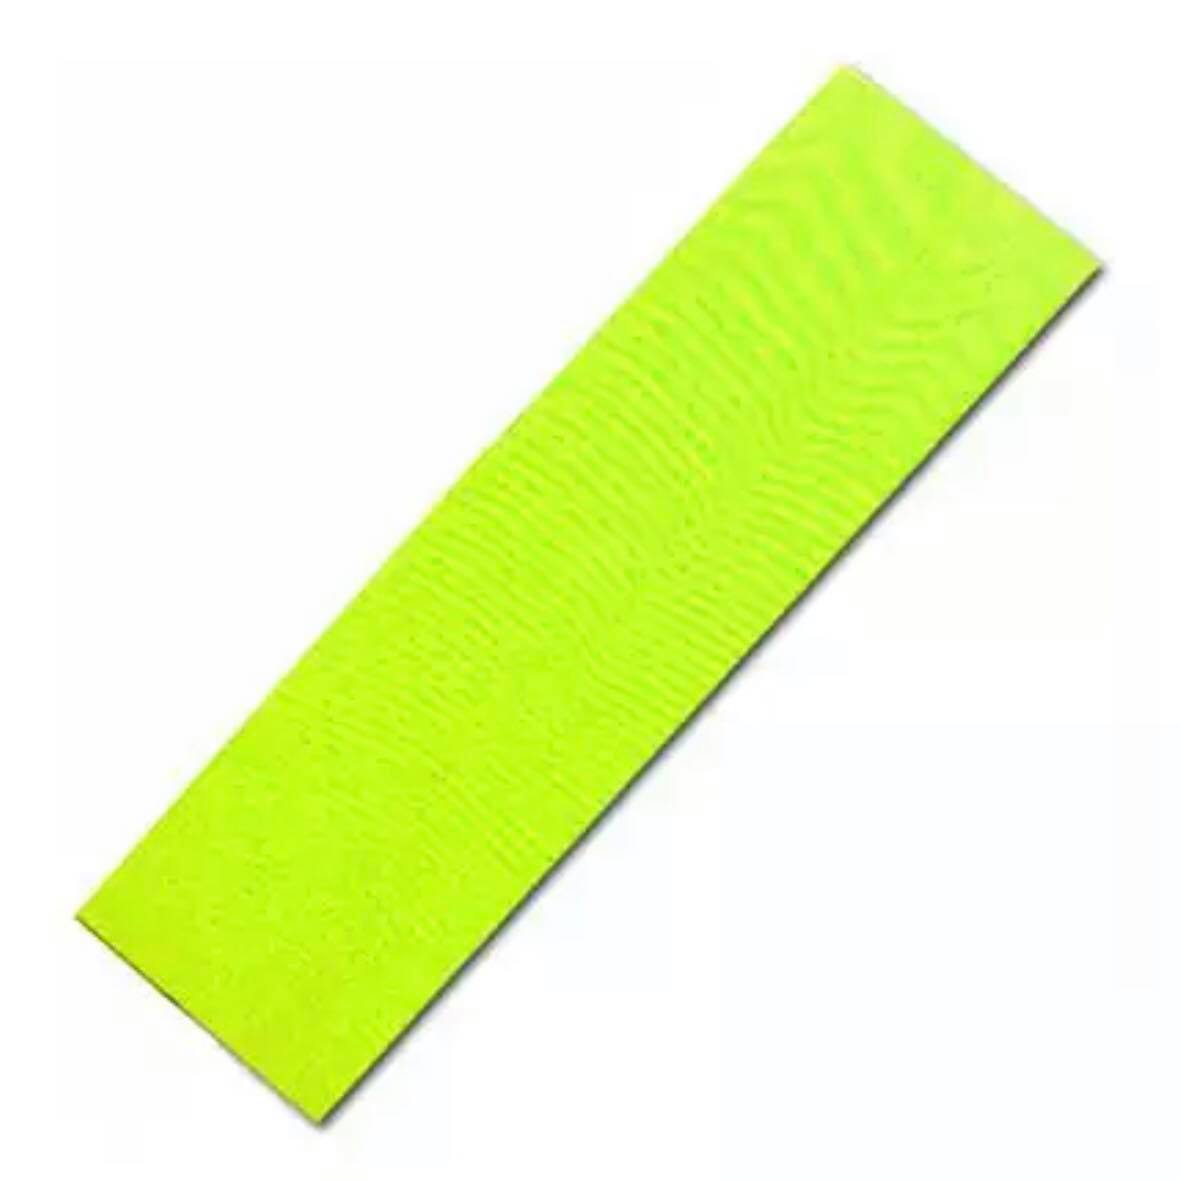 Stretch Headband for School, Sport, Yoga Headbands School Ponytails Fluoro Yellow 